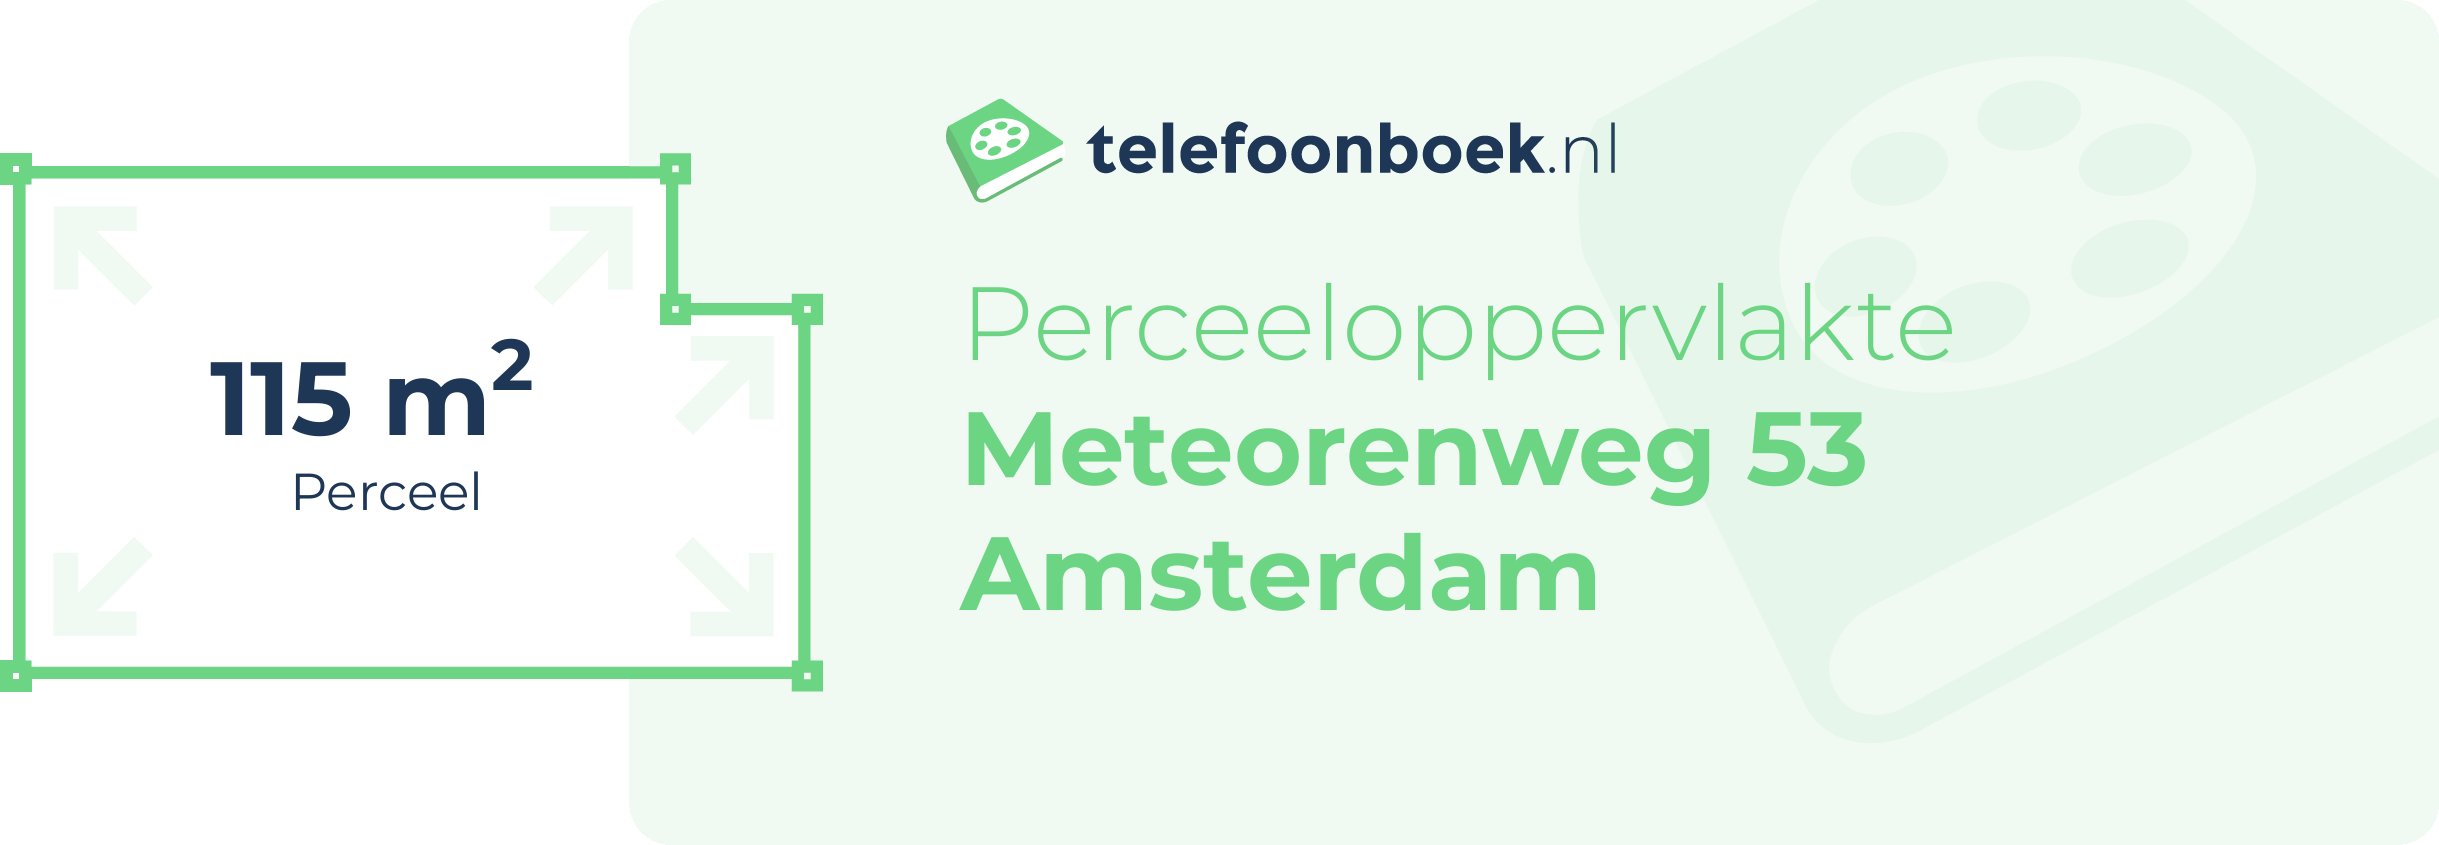 Perceeloppervlakte Meteorenweg 53 Amsterdam